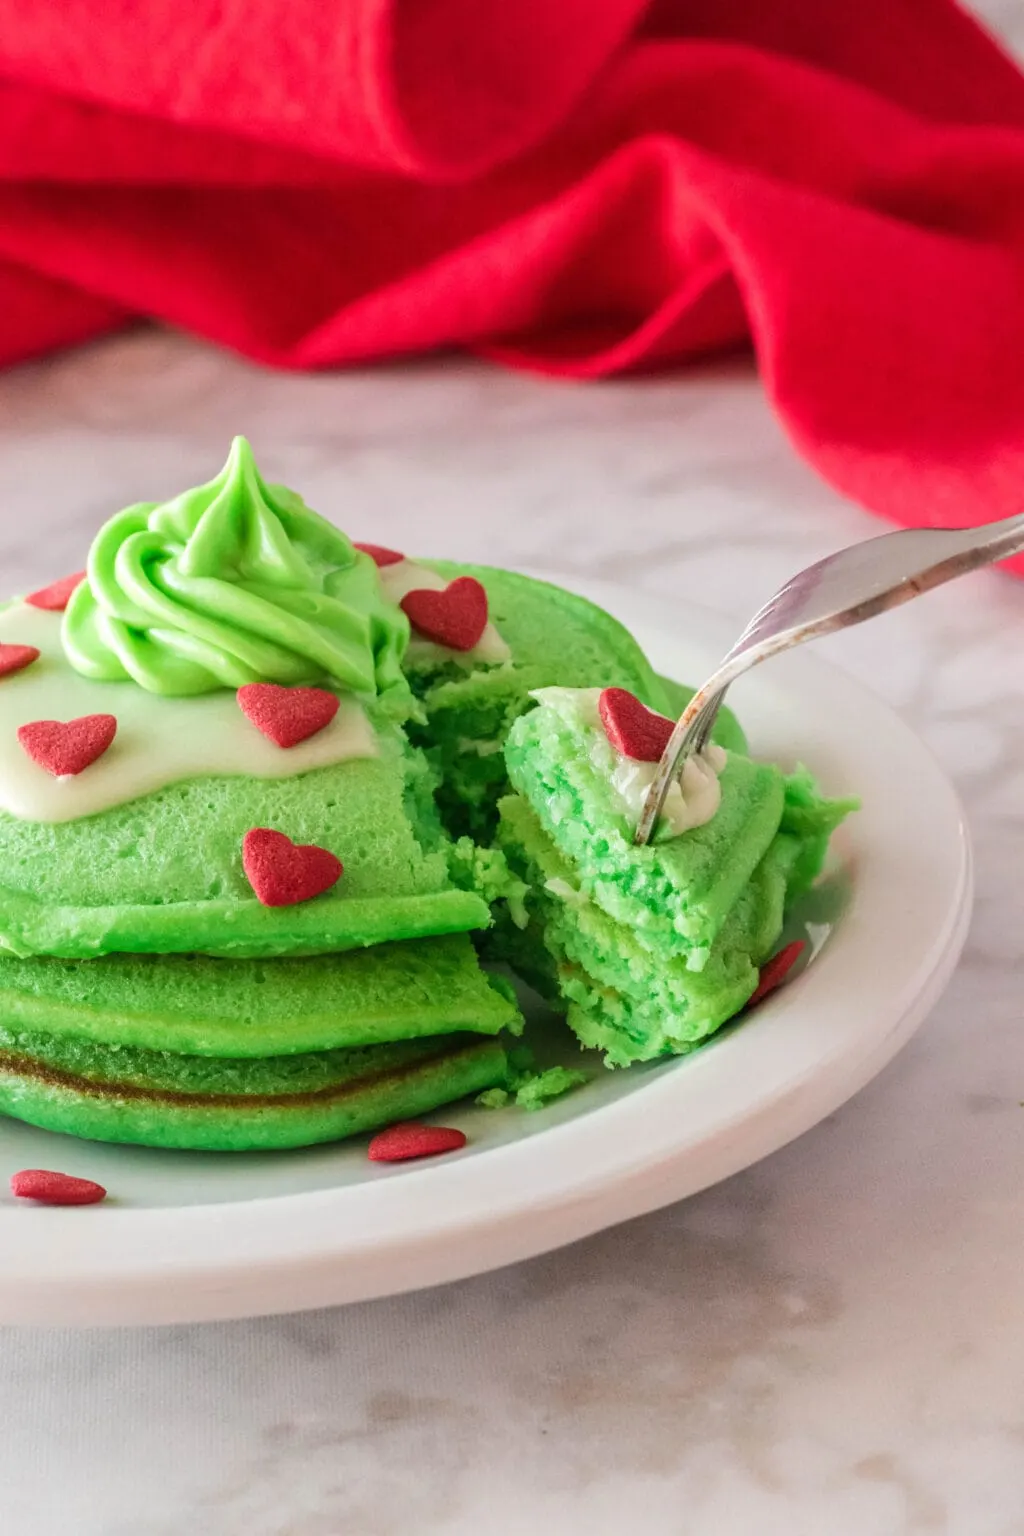 Make Perfect Grinch IHOP Pancakes Copy Cat Recipe! 